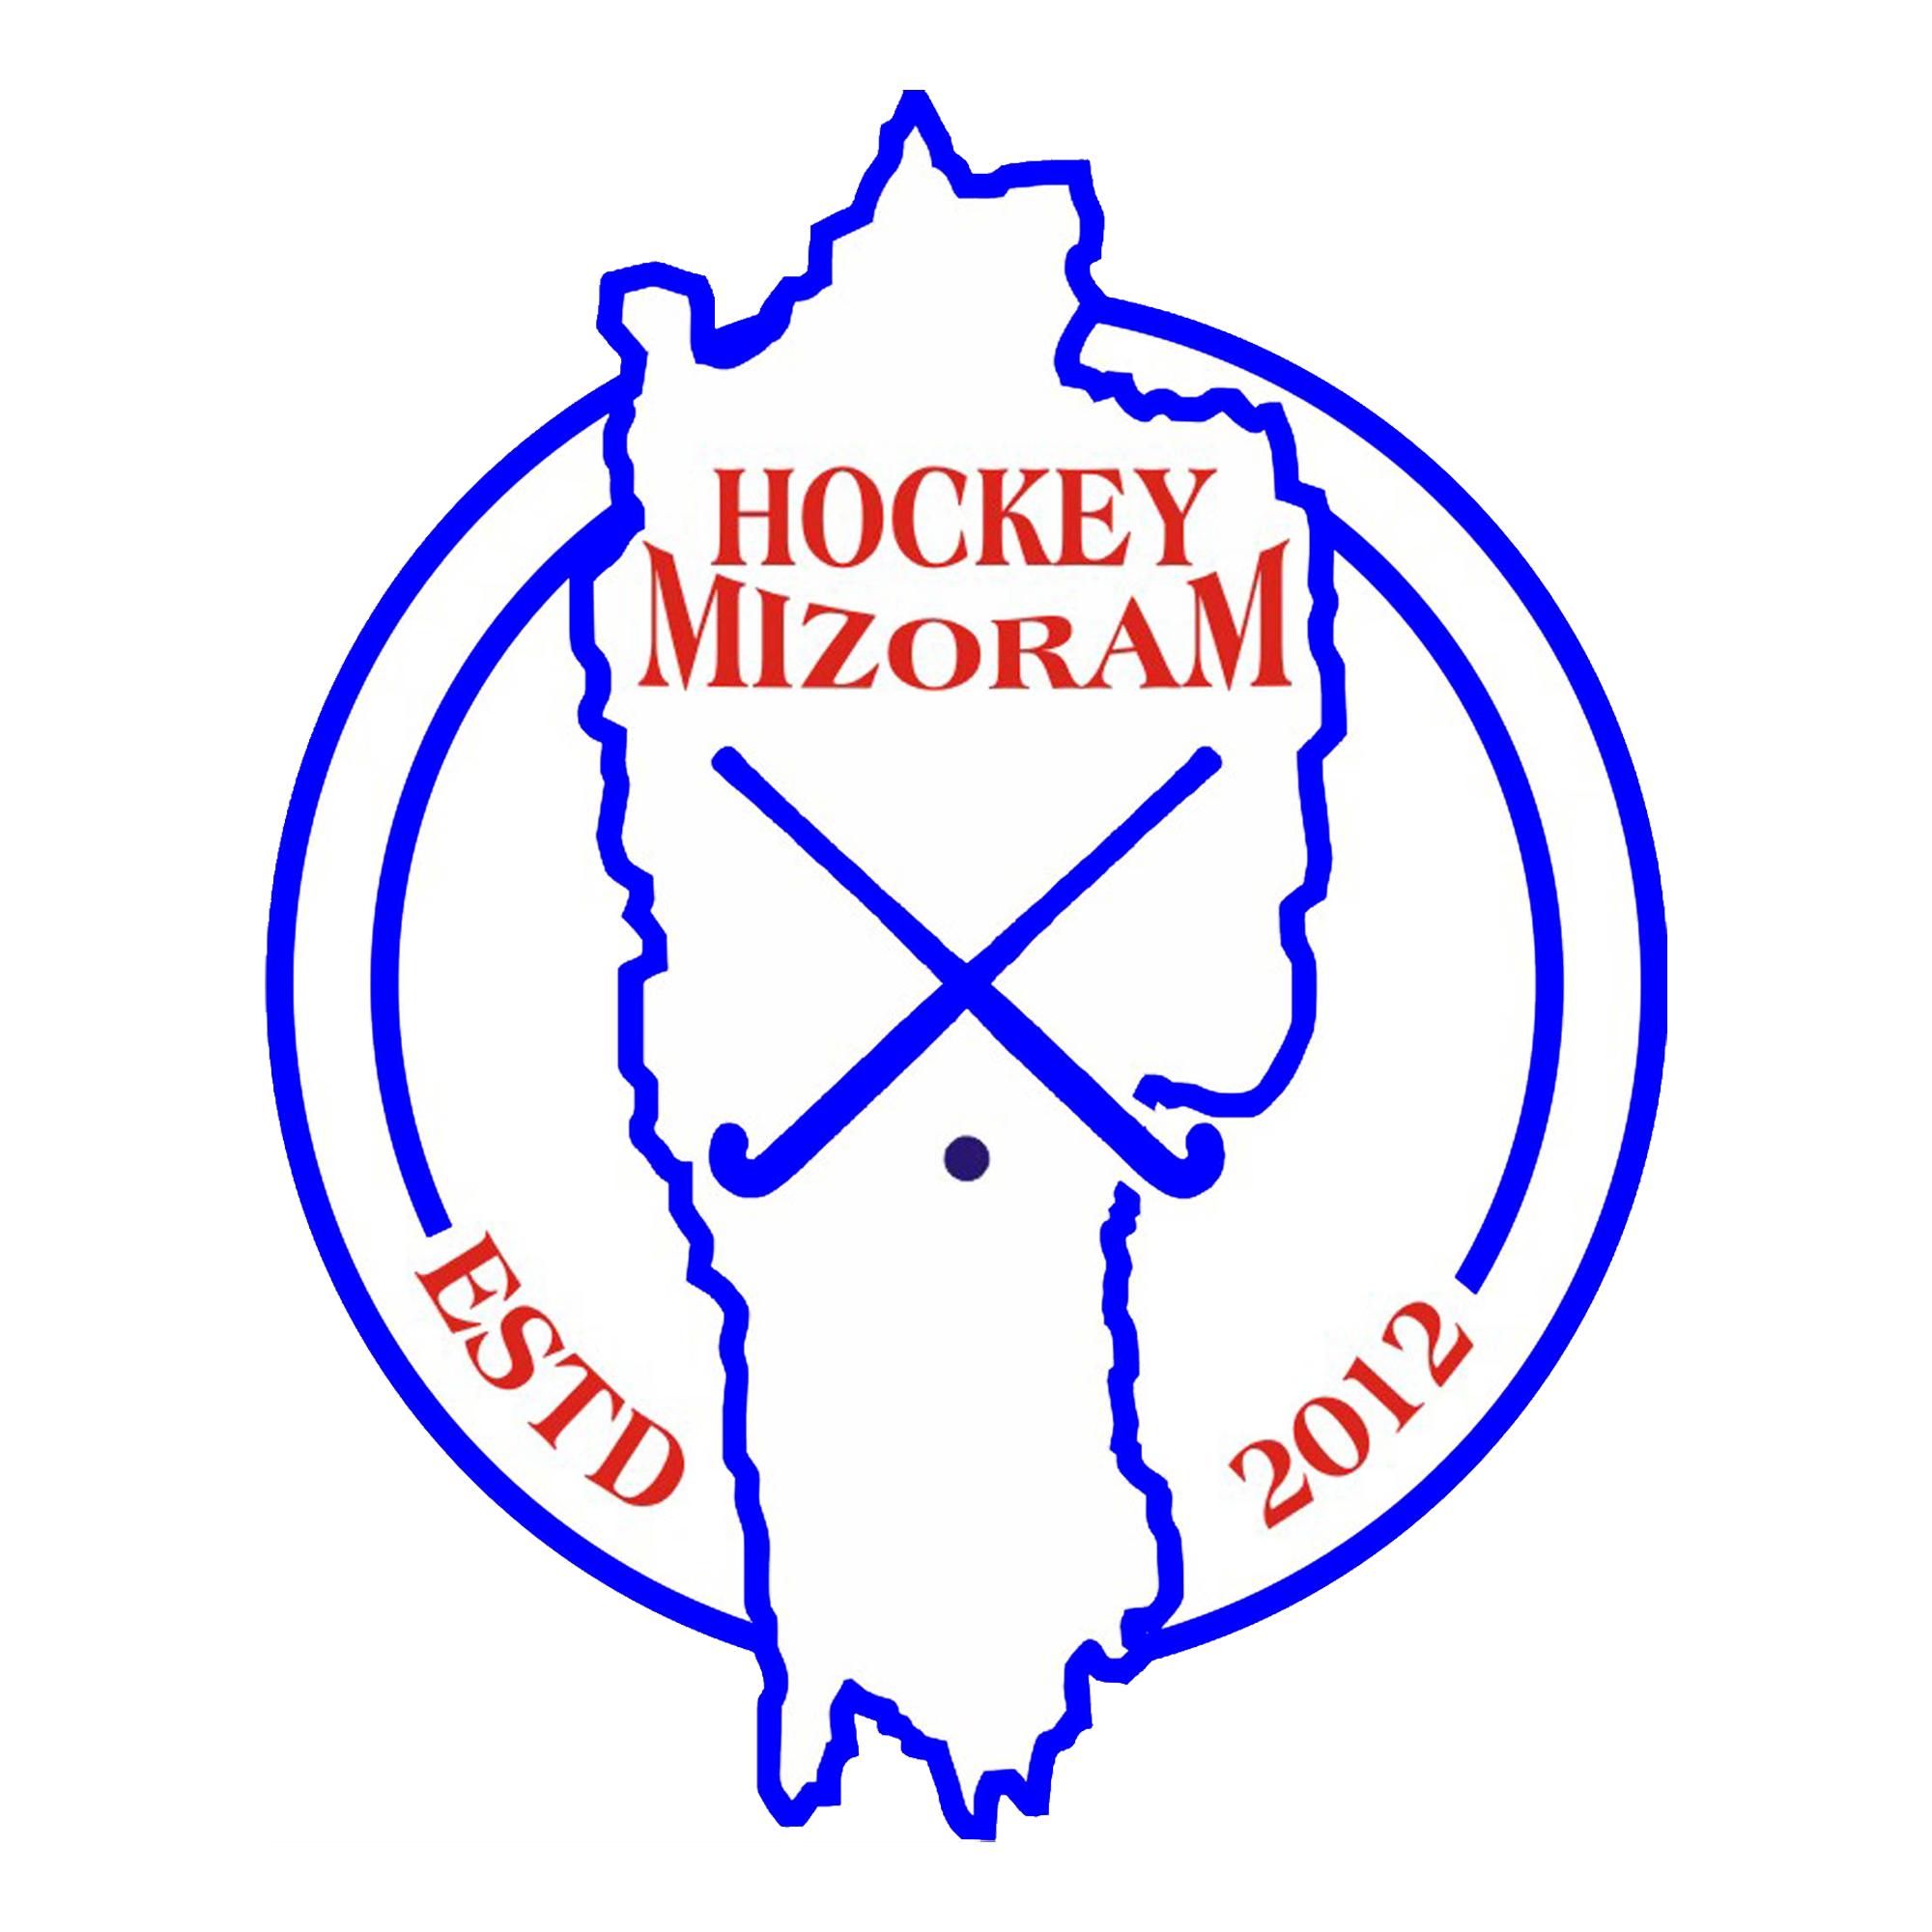 Hockey Mizoram